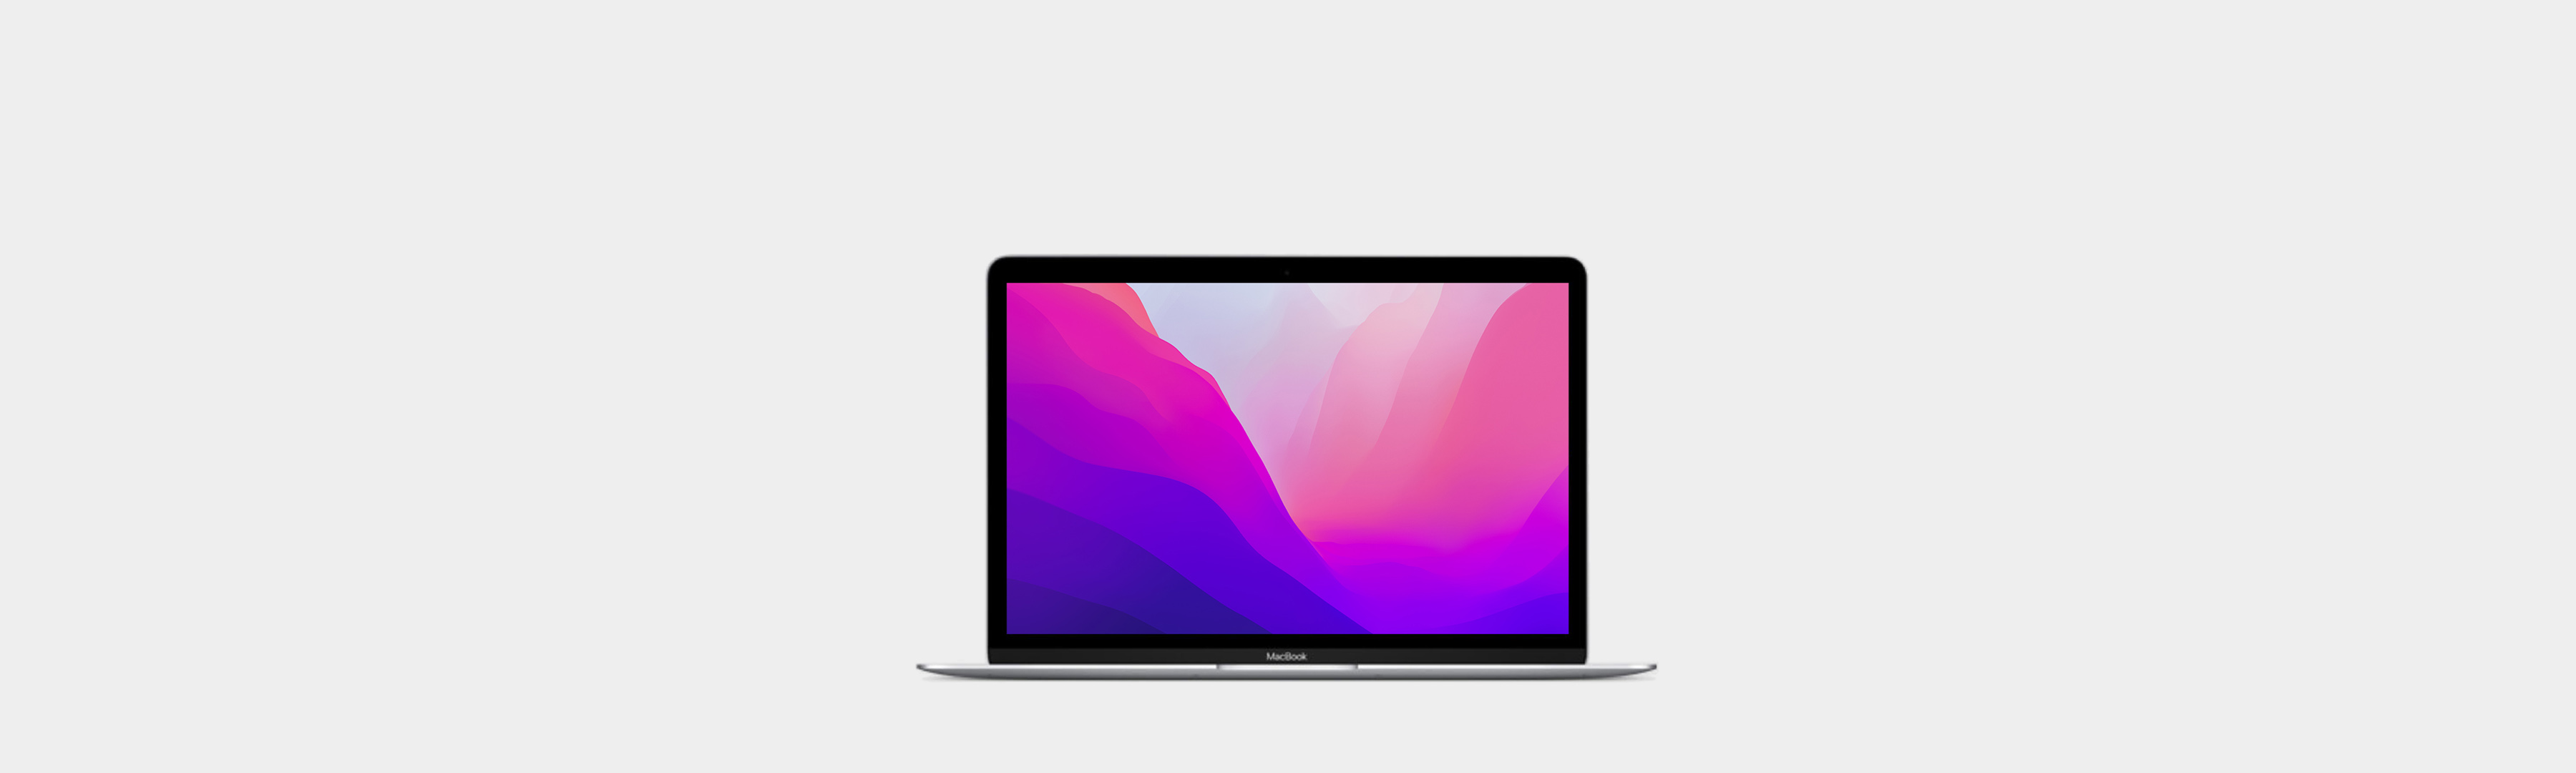 Apple macbook pro technical support apple m1 macbook pro case